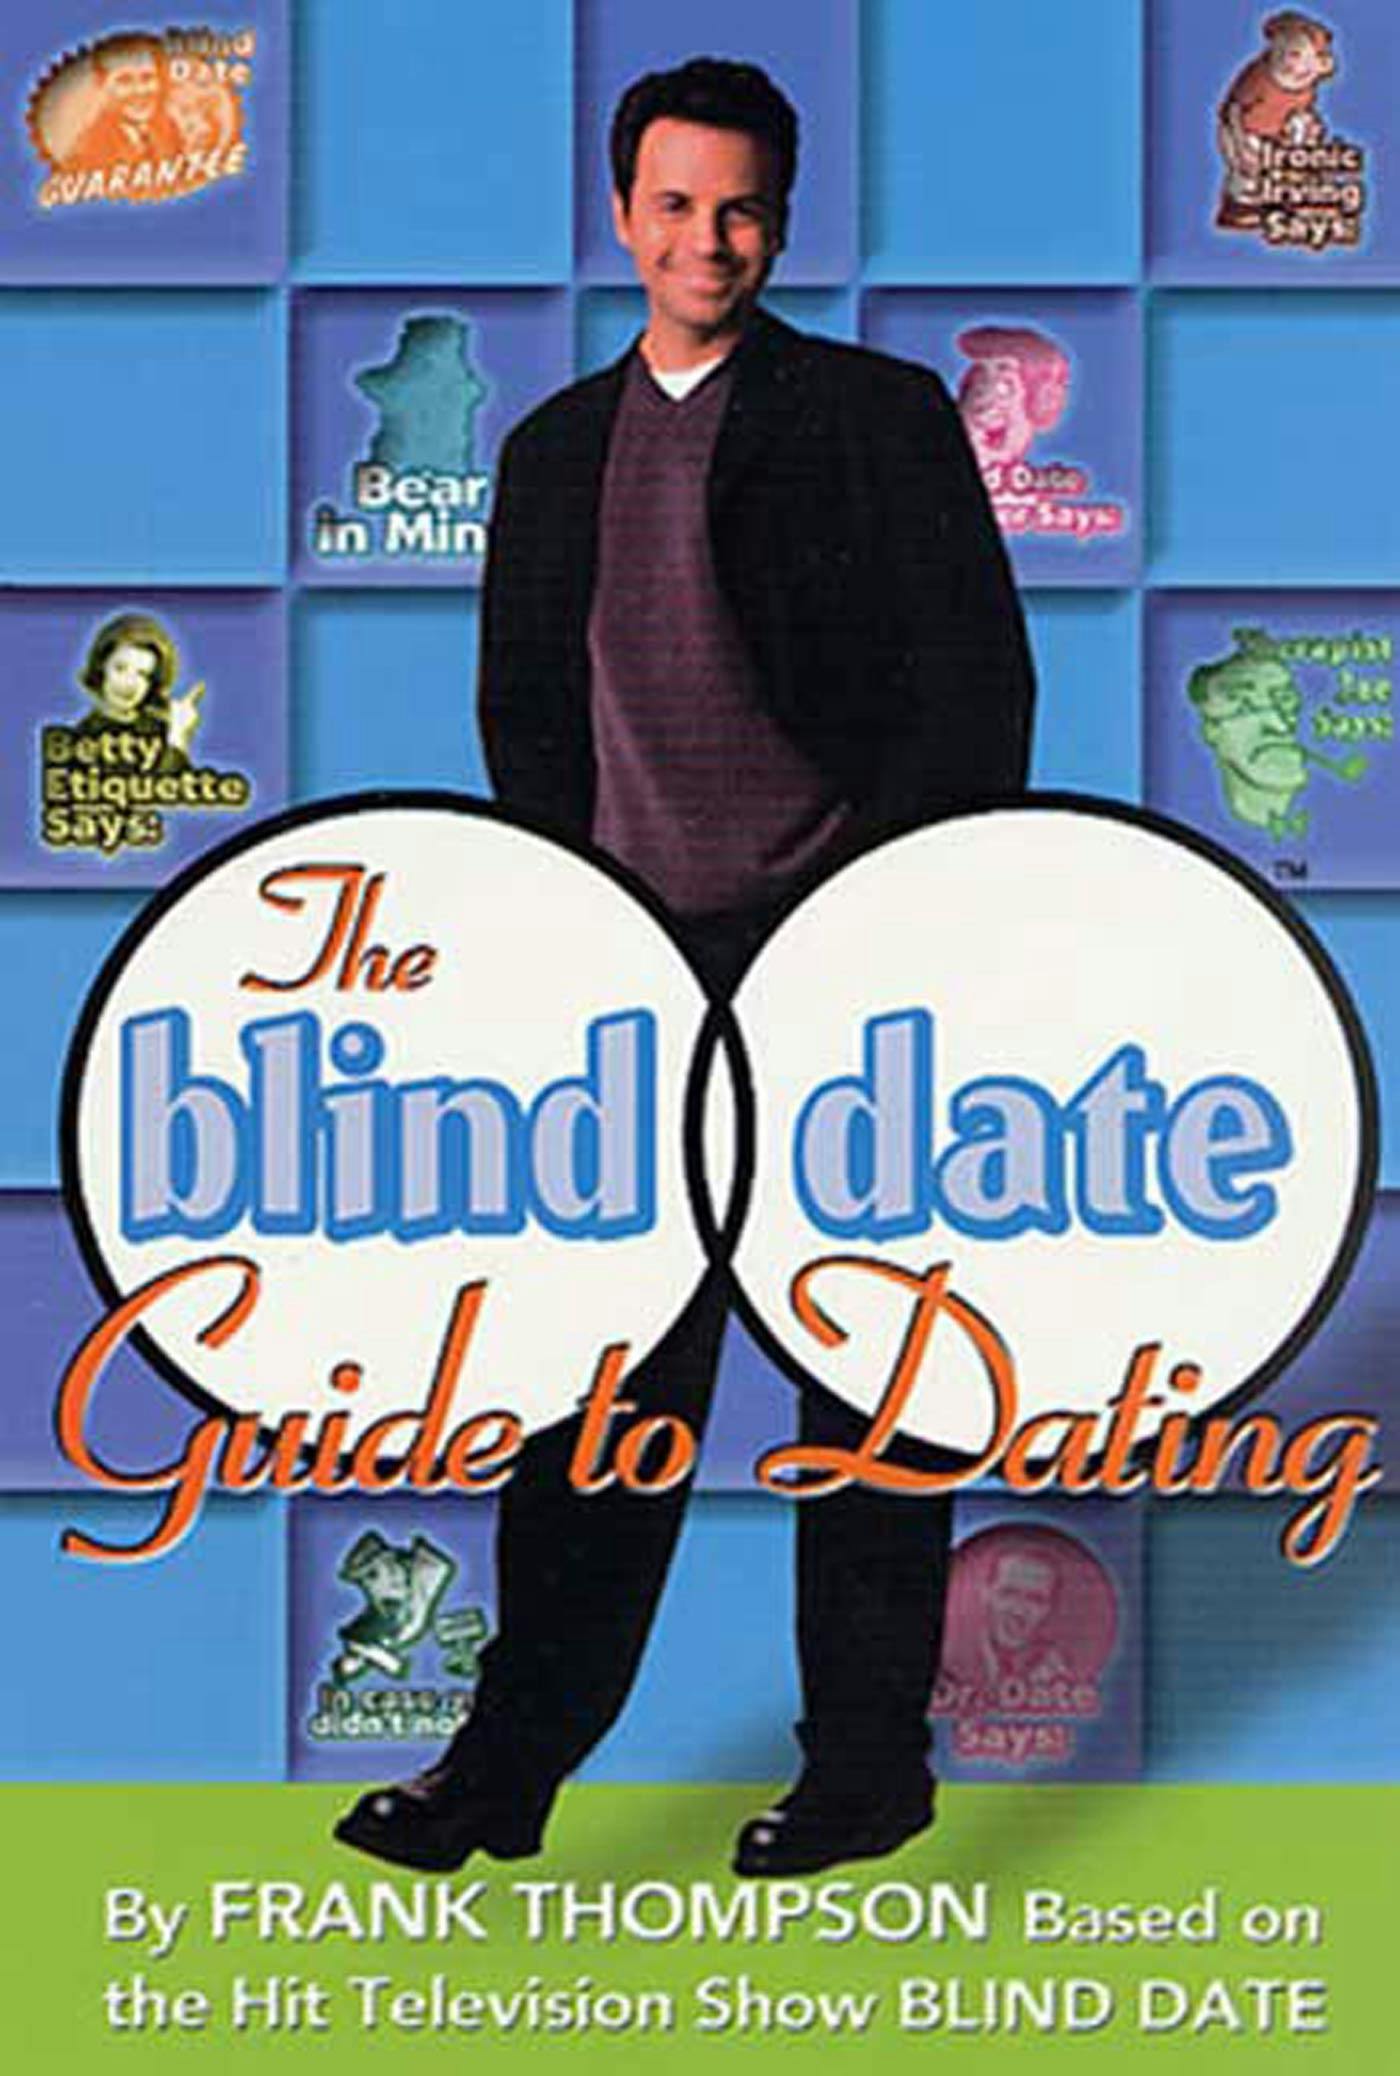 Blind Dating